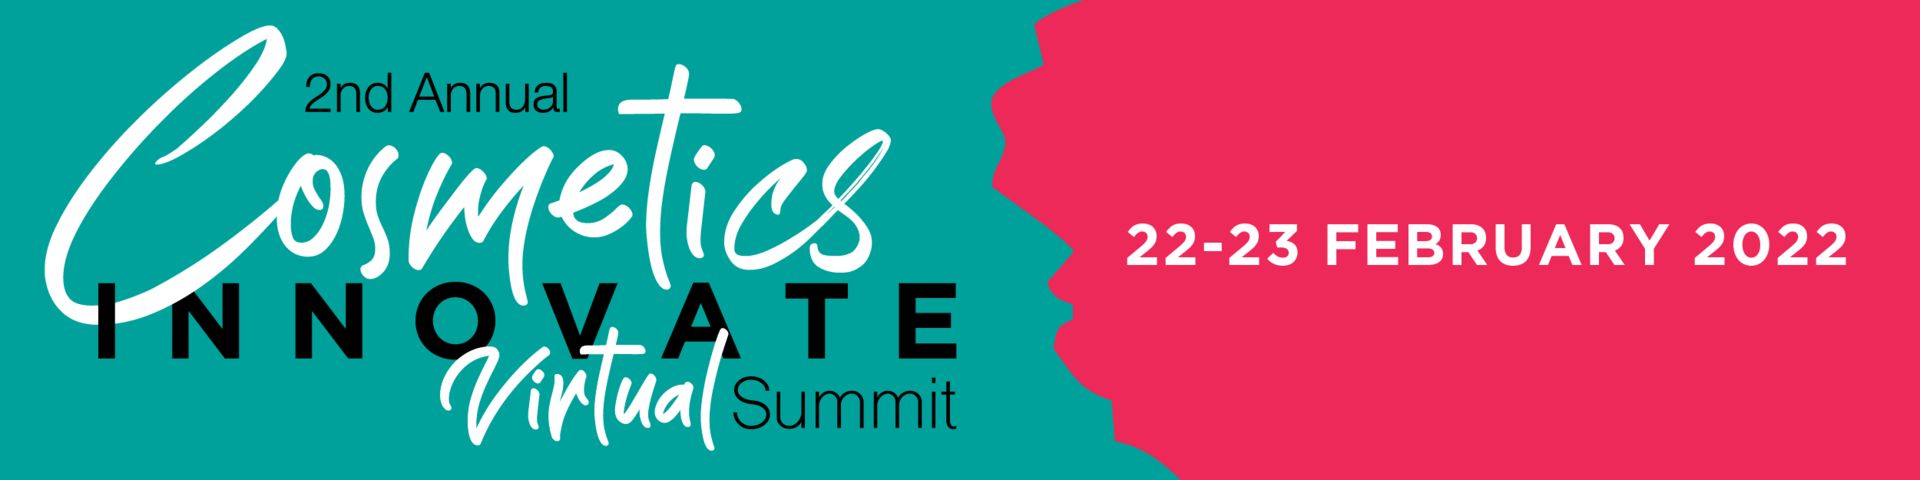 Cosmetics Innovate Virtual Summit, 22 - 23 February 2022